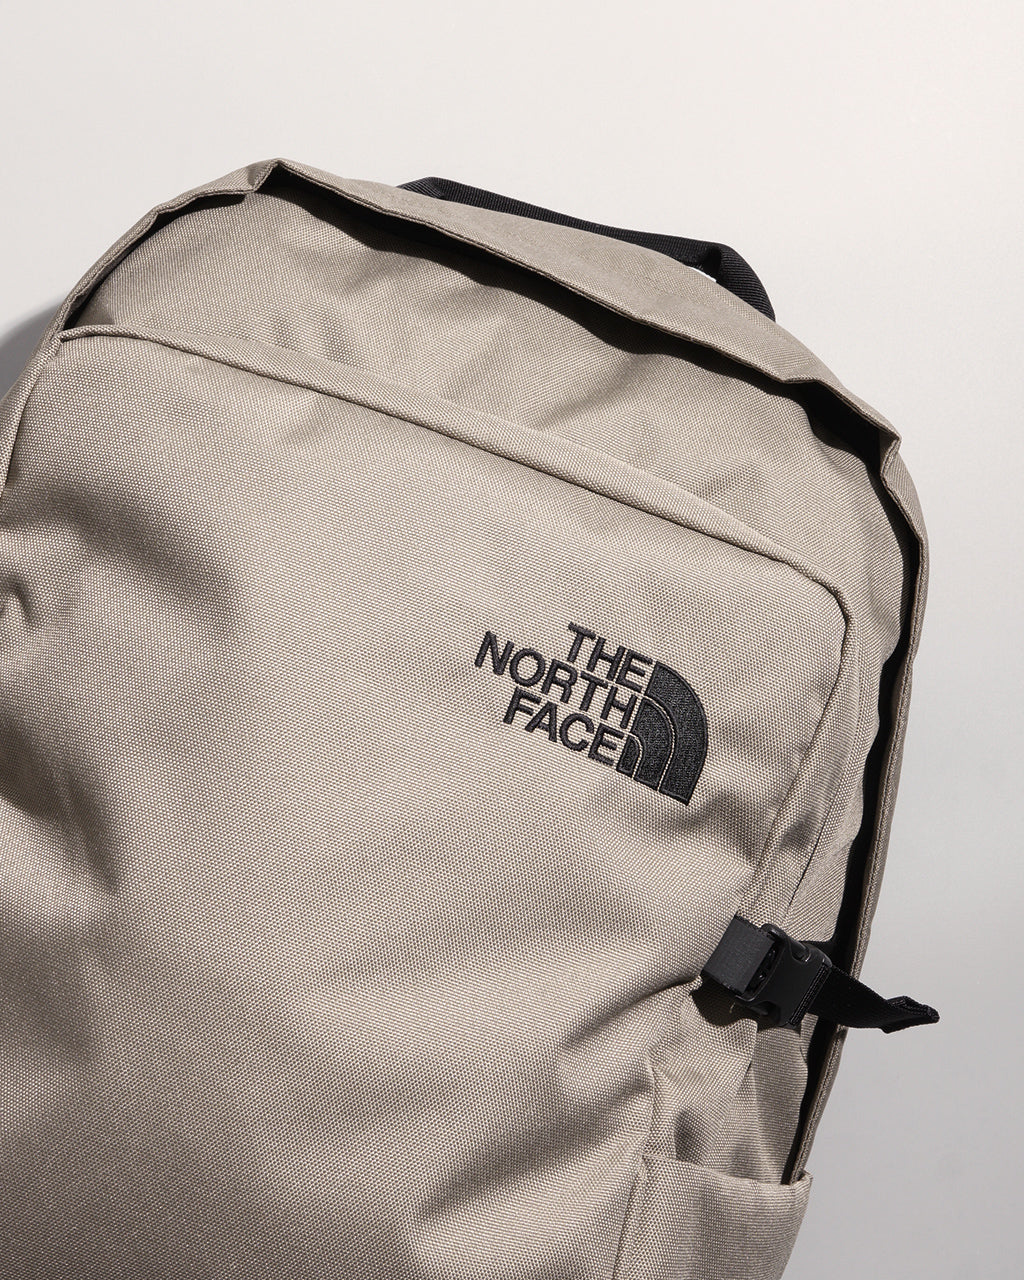 THE NORTH FACE ノースフェイス ボルダー デイパック24L Boulder Daypack リュックサック バックパック   NM72356【送料無料】